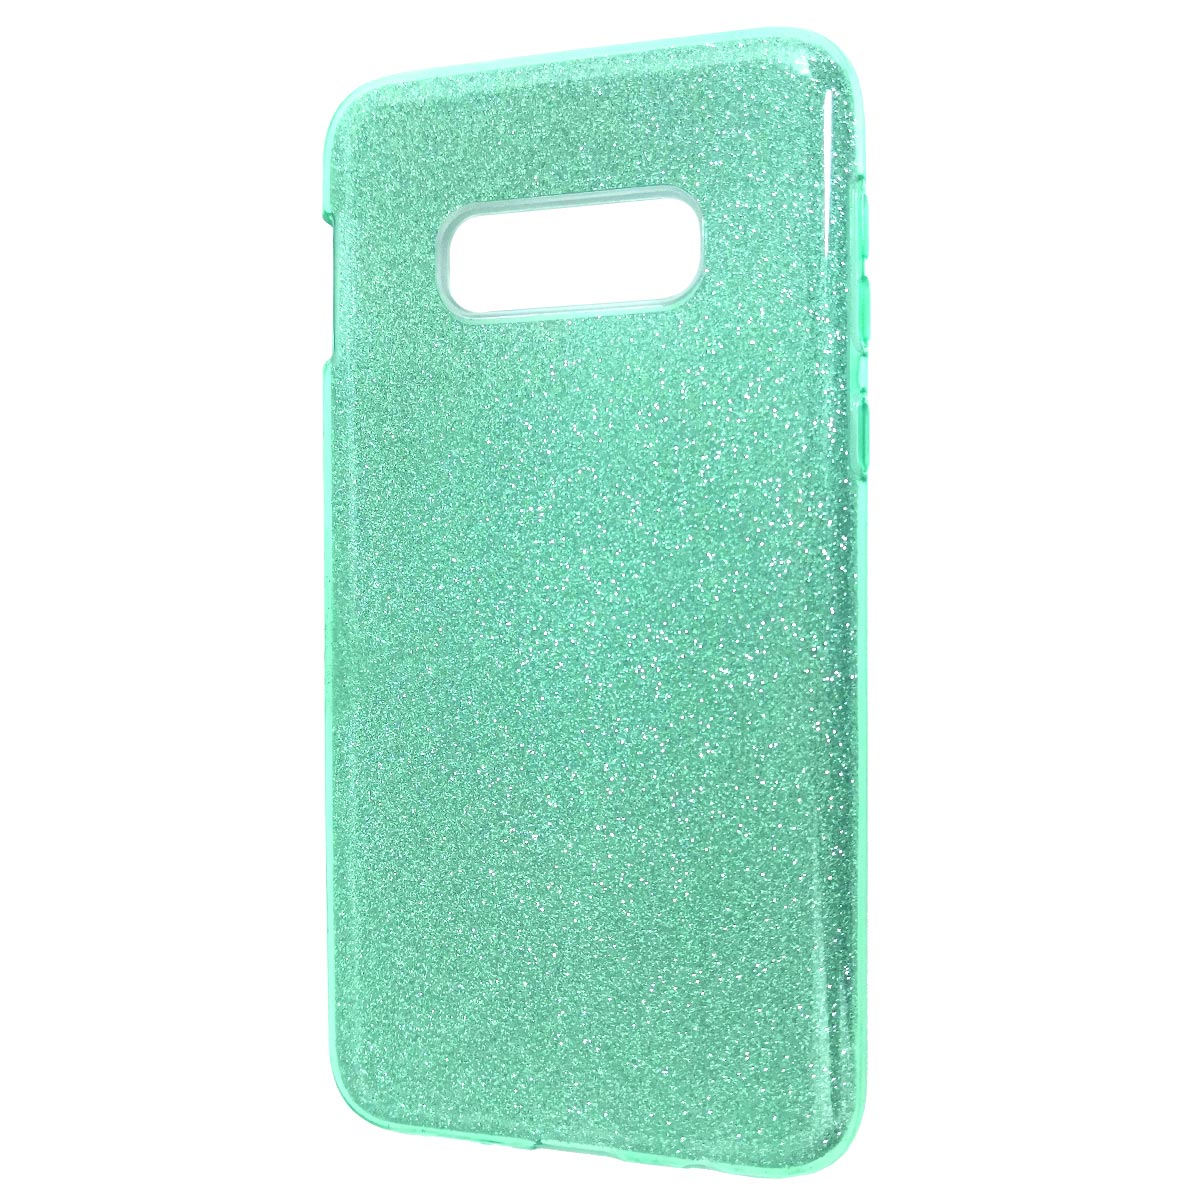 Чехол накладка Shine для SAMSUNG Galaxy S10e (SM-G970), силикон, блестки, цвет зеленый